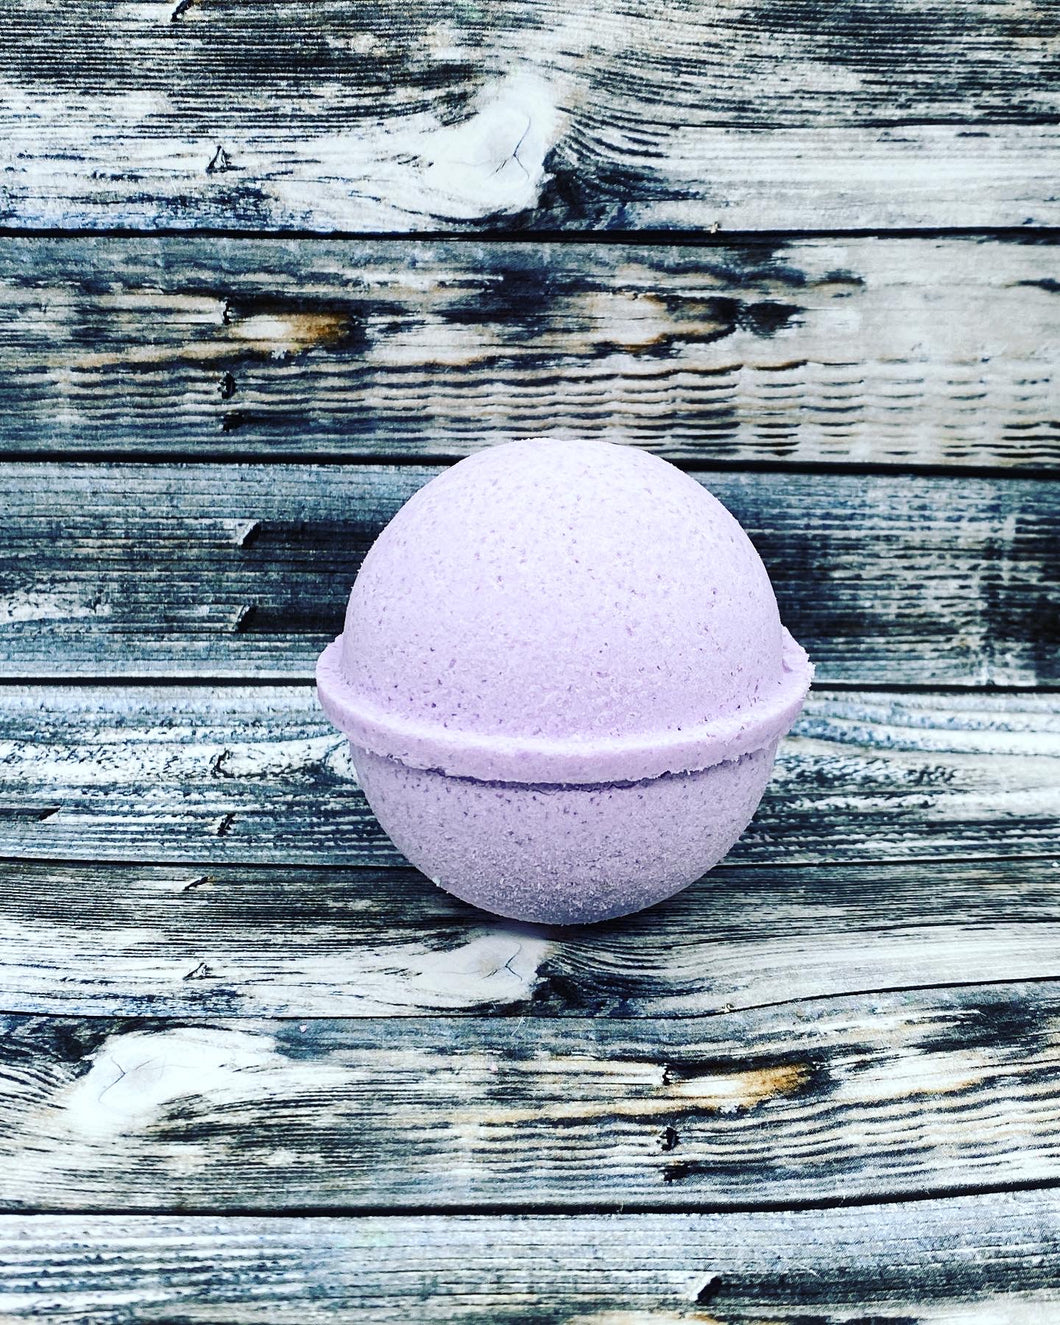 Lavender Chamomile Bath Bomb